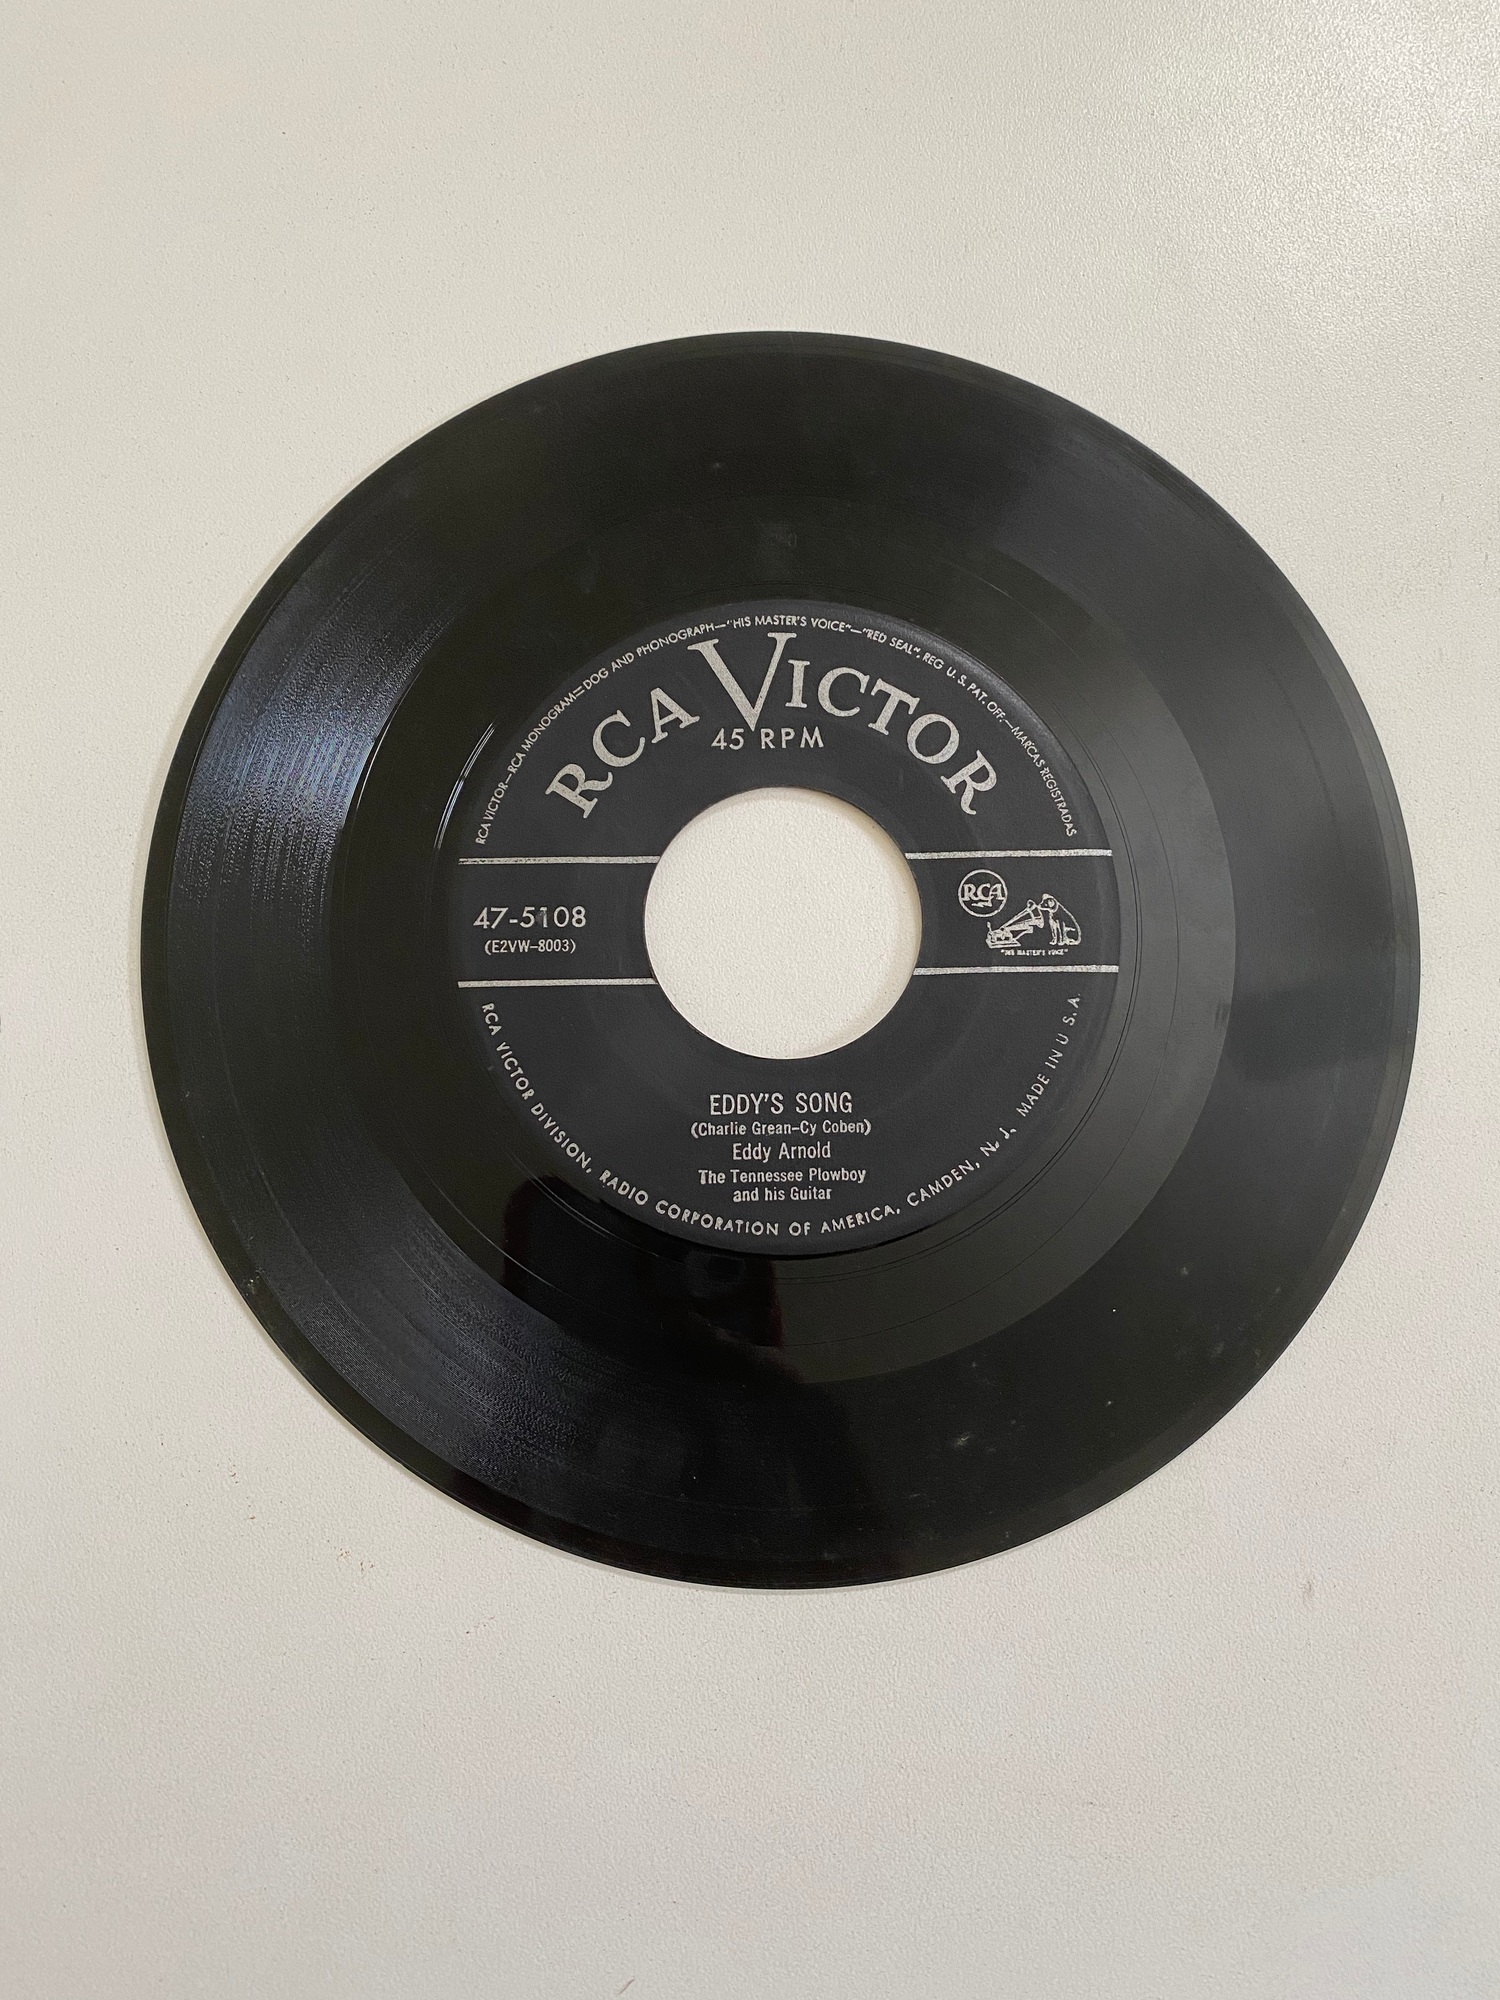 Eddy Arnold - Eddy's Song | 45 The Vintedge Co.